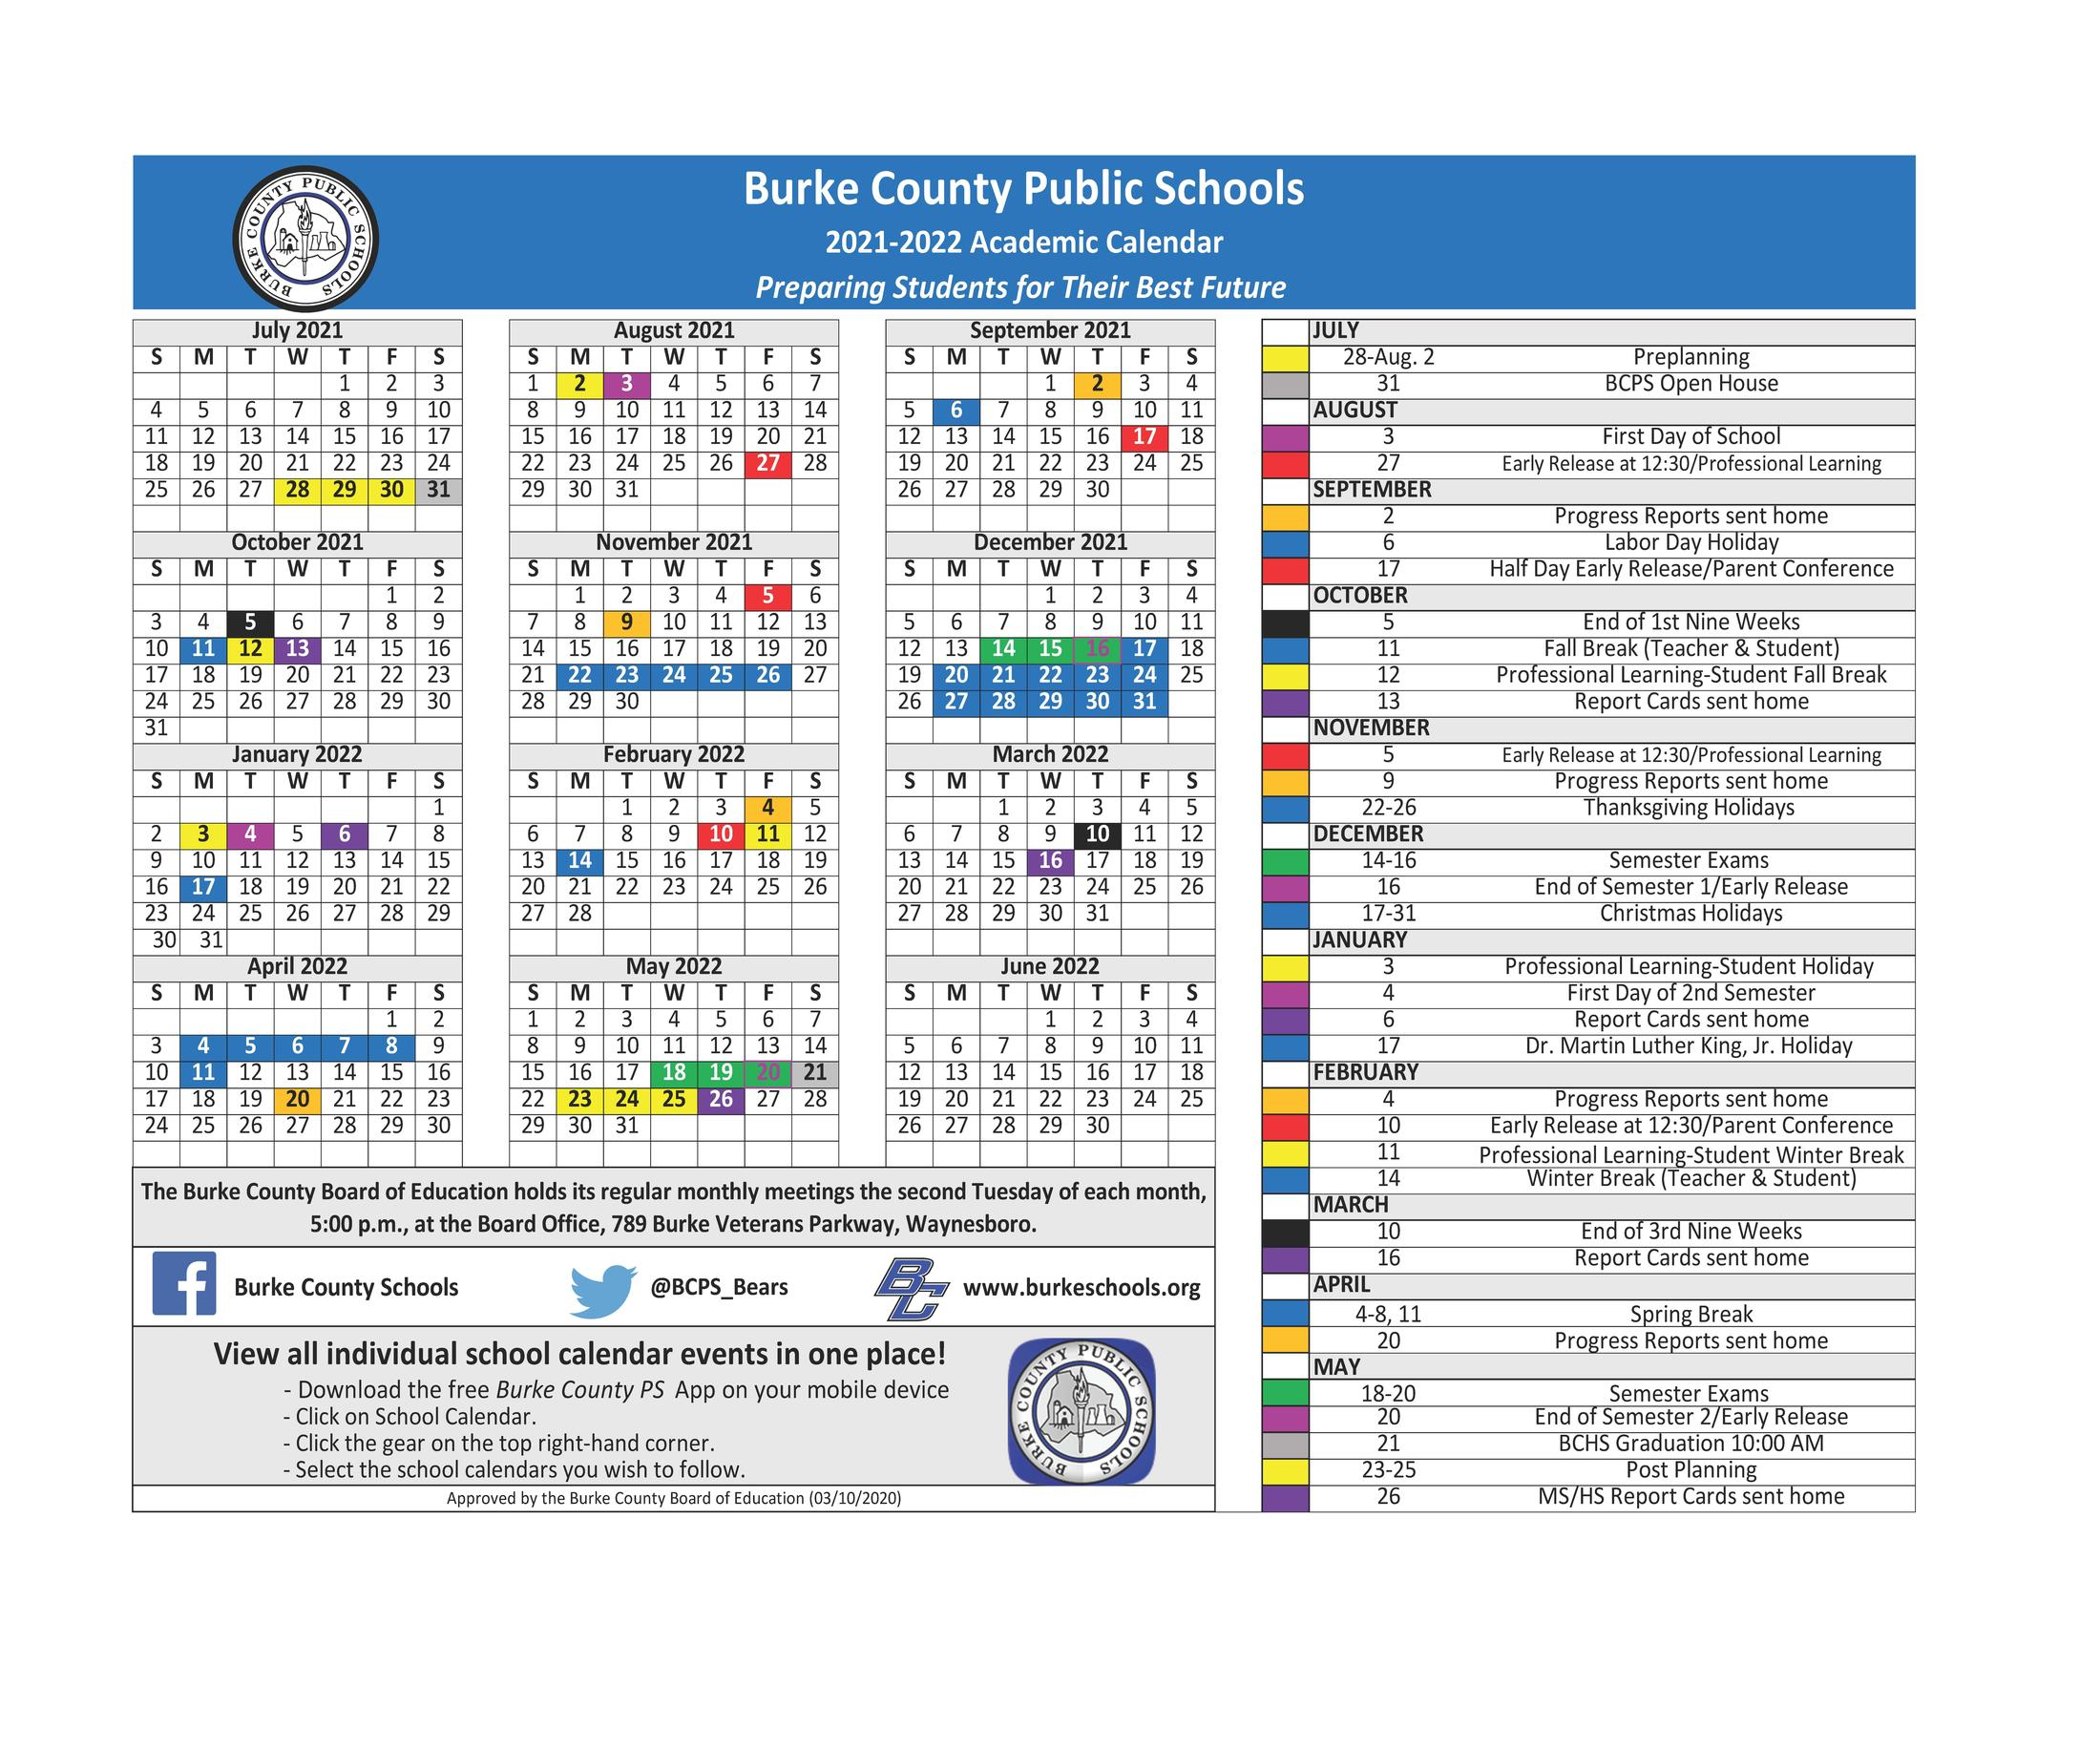 Burke County Public Schools Holiday Calendar 2021-2022